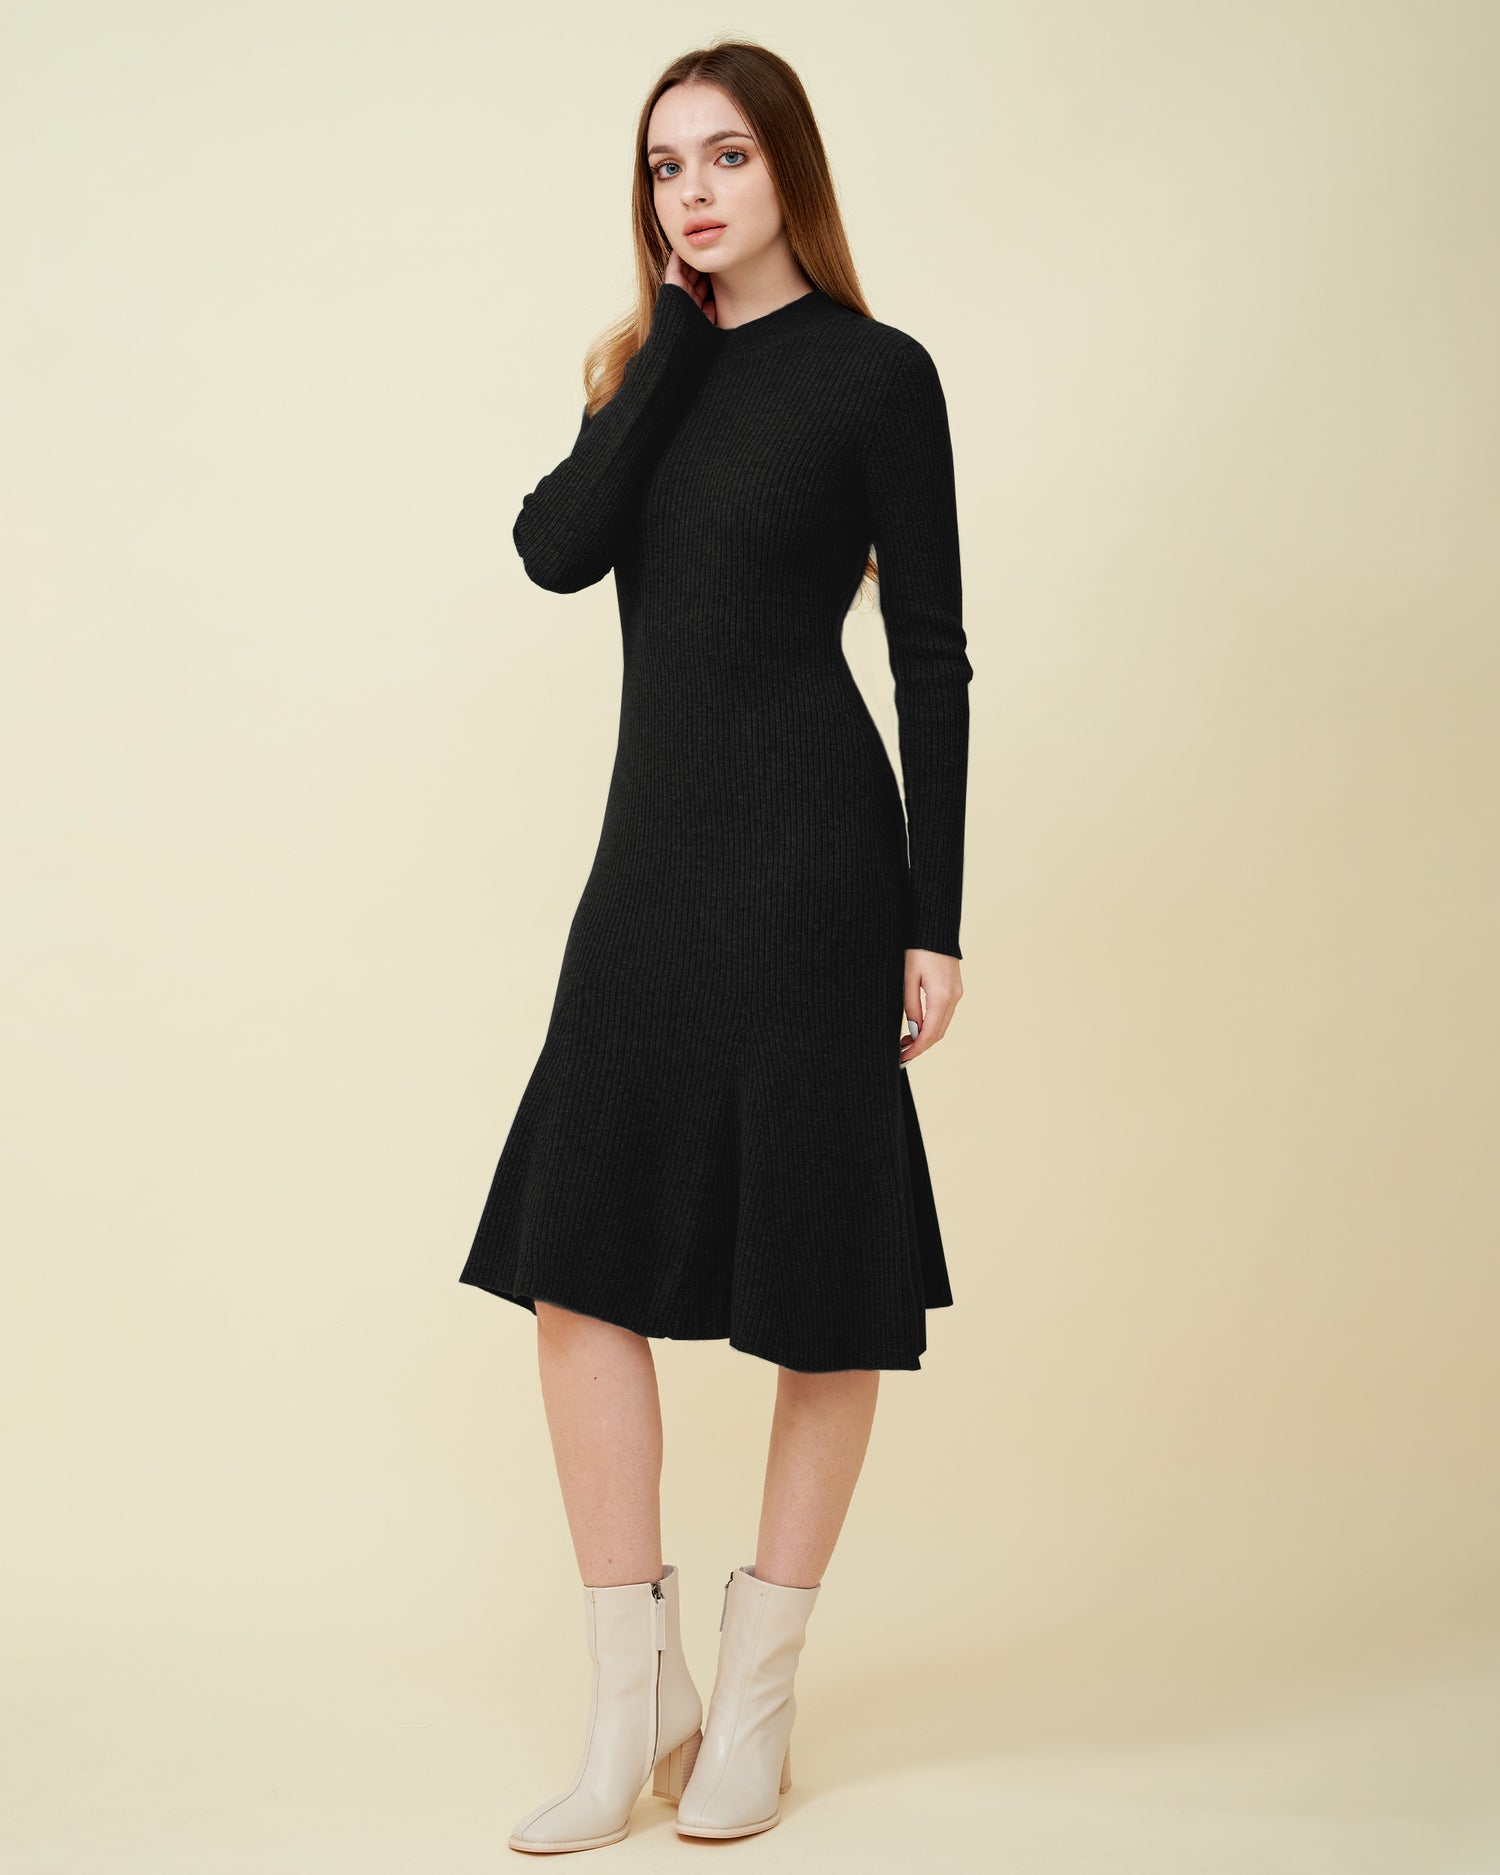 premium wool cashmere sweater dress davinii knit dresscode long dress handmade knitwear knit luxury fashion instagram fashionista